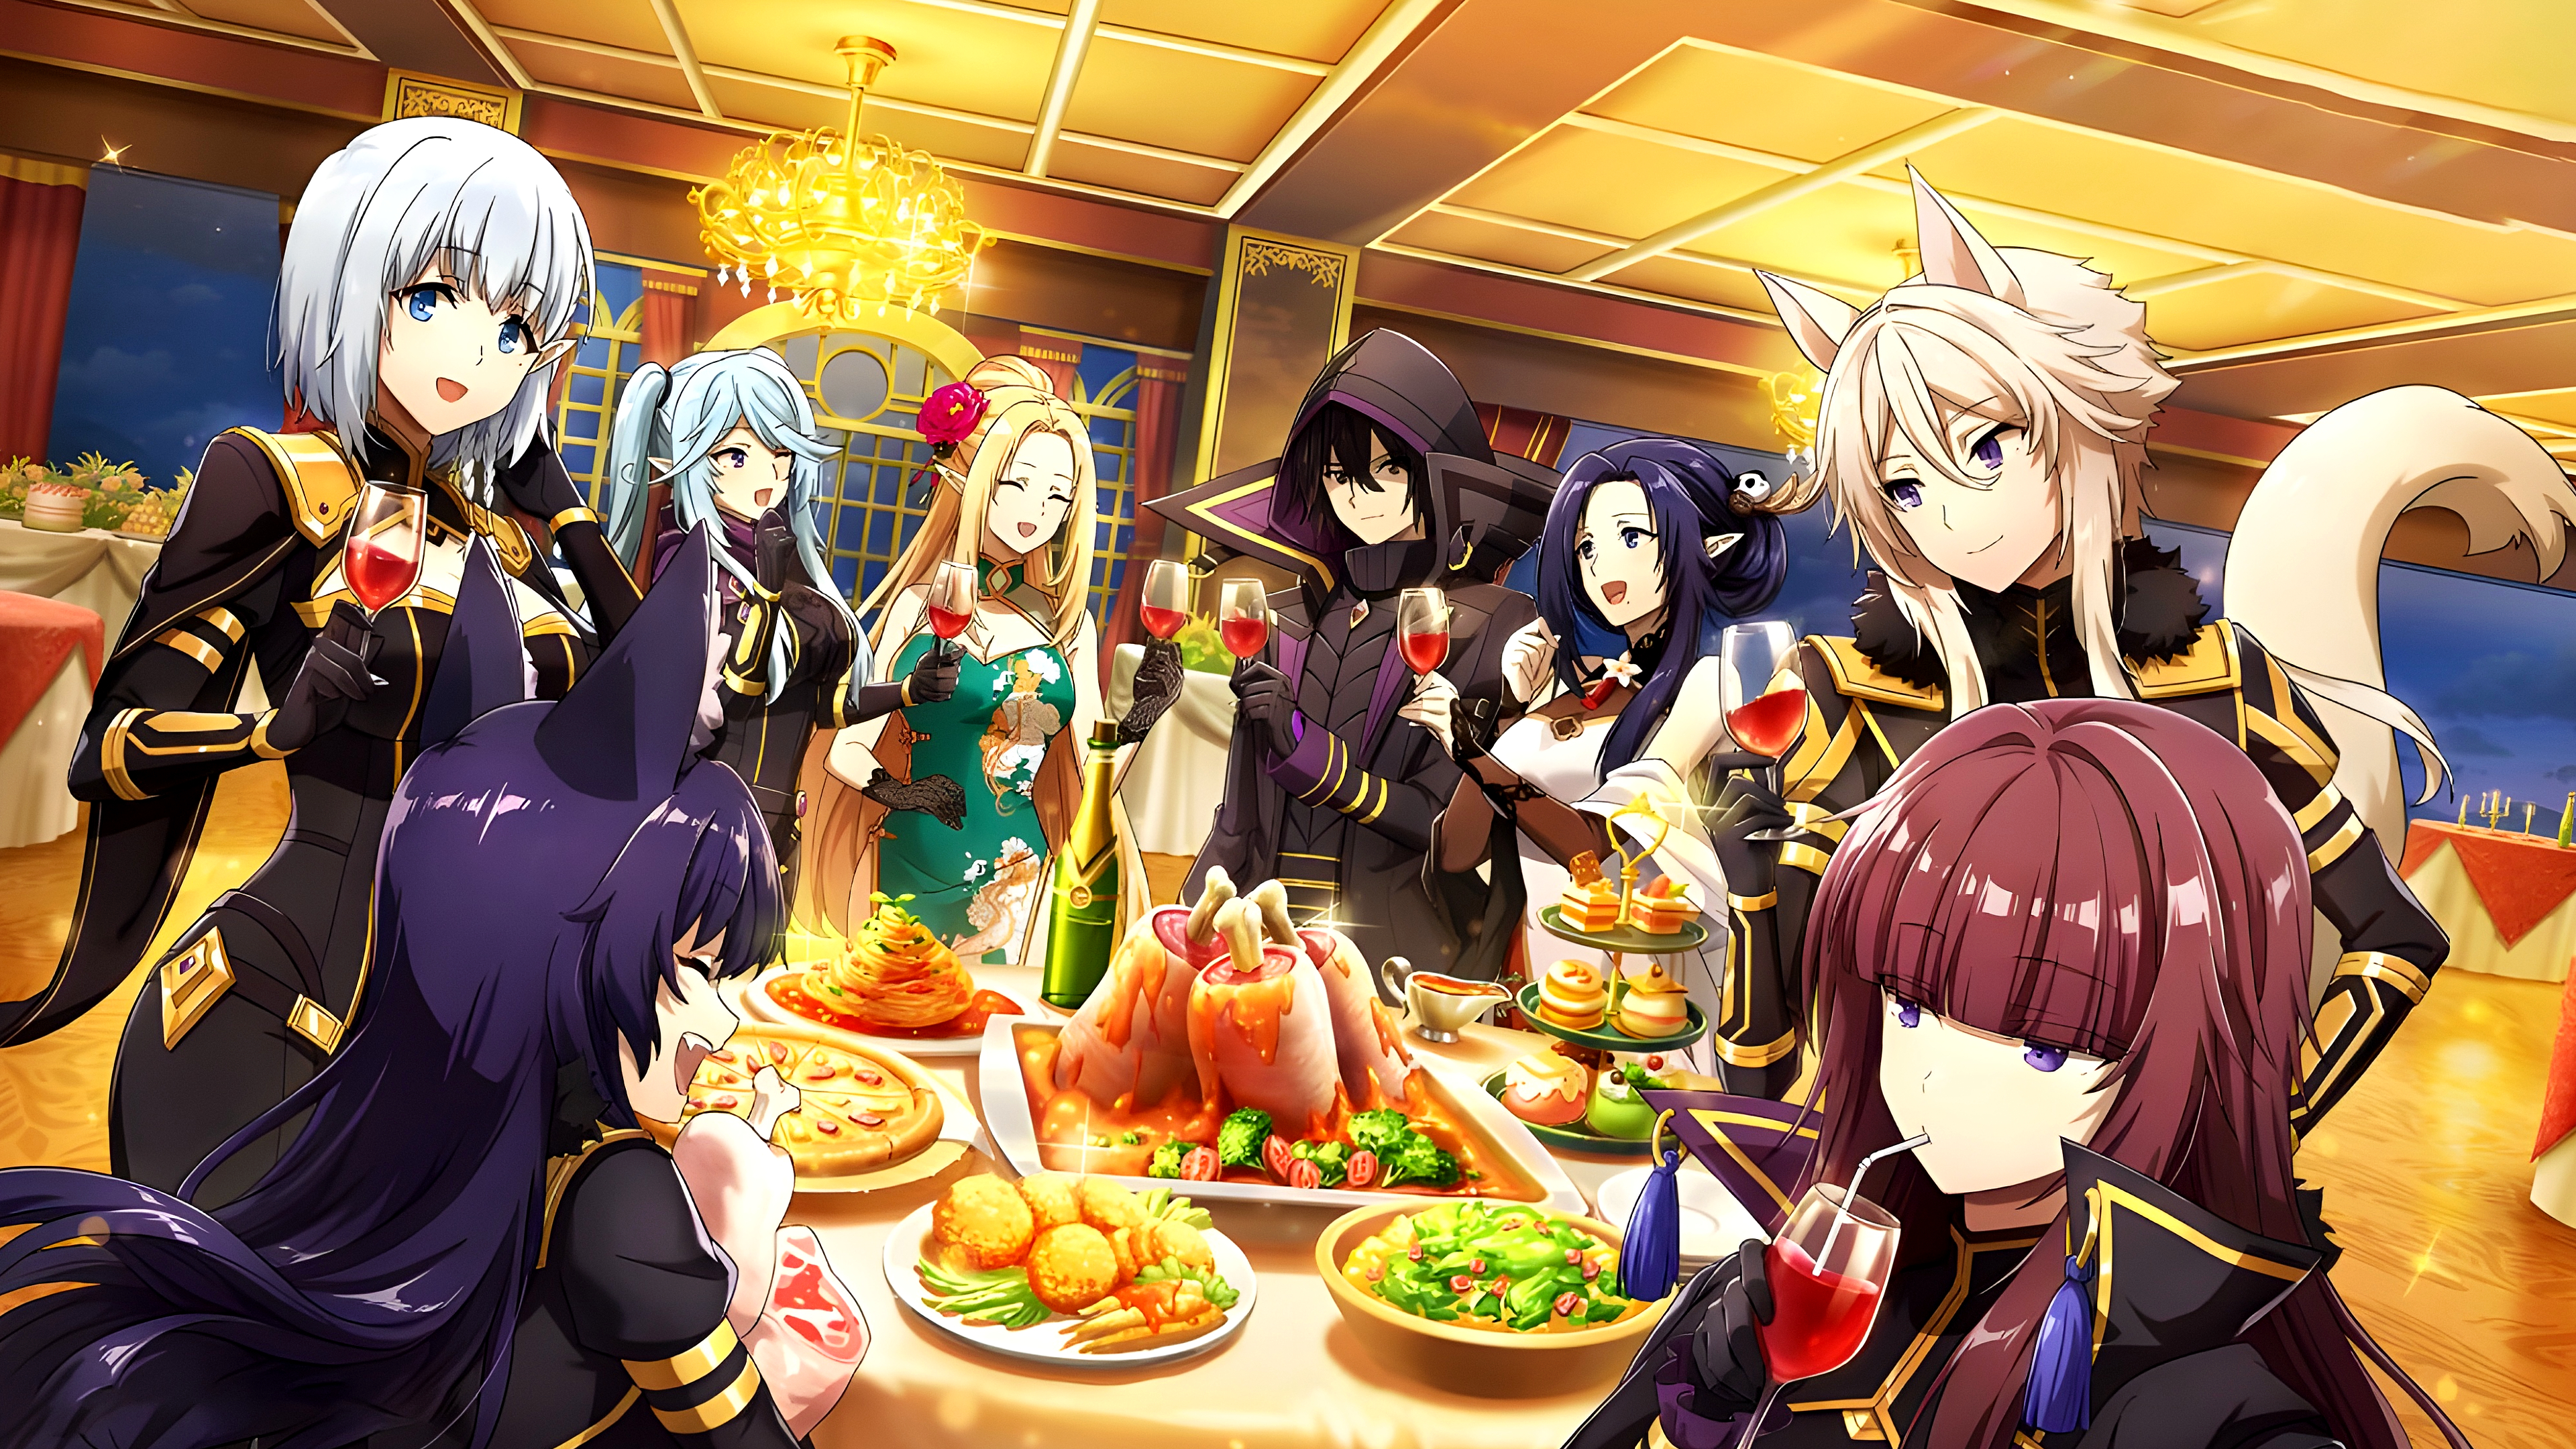 The Eminence In Shadow Anime Anime Girls Natsume Beta Alpha Cid Kagenou Zeta Luna Gamma Food Chandel 3840x2160